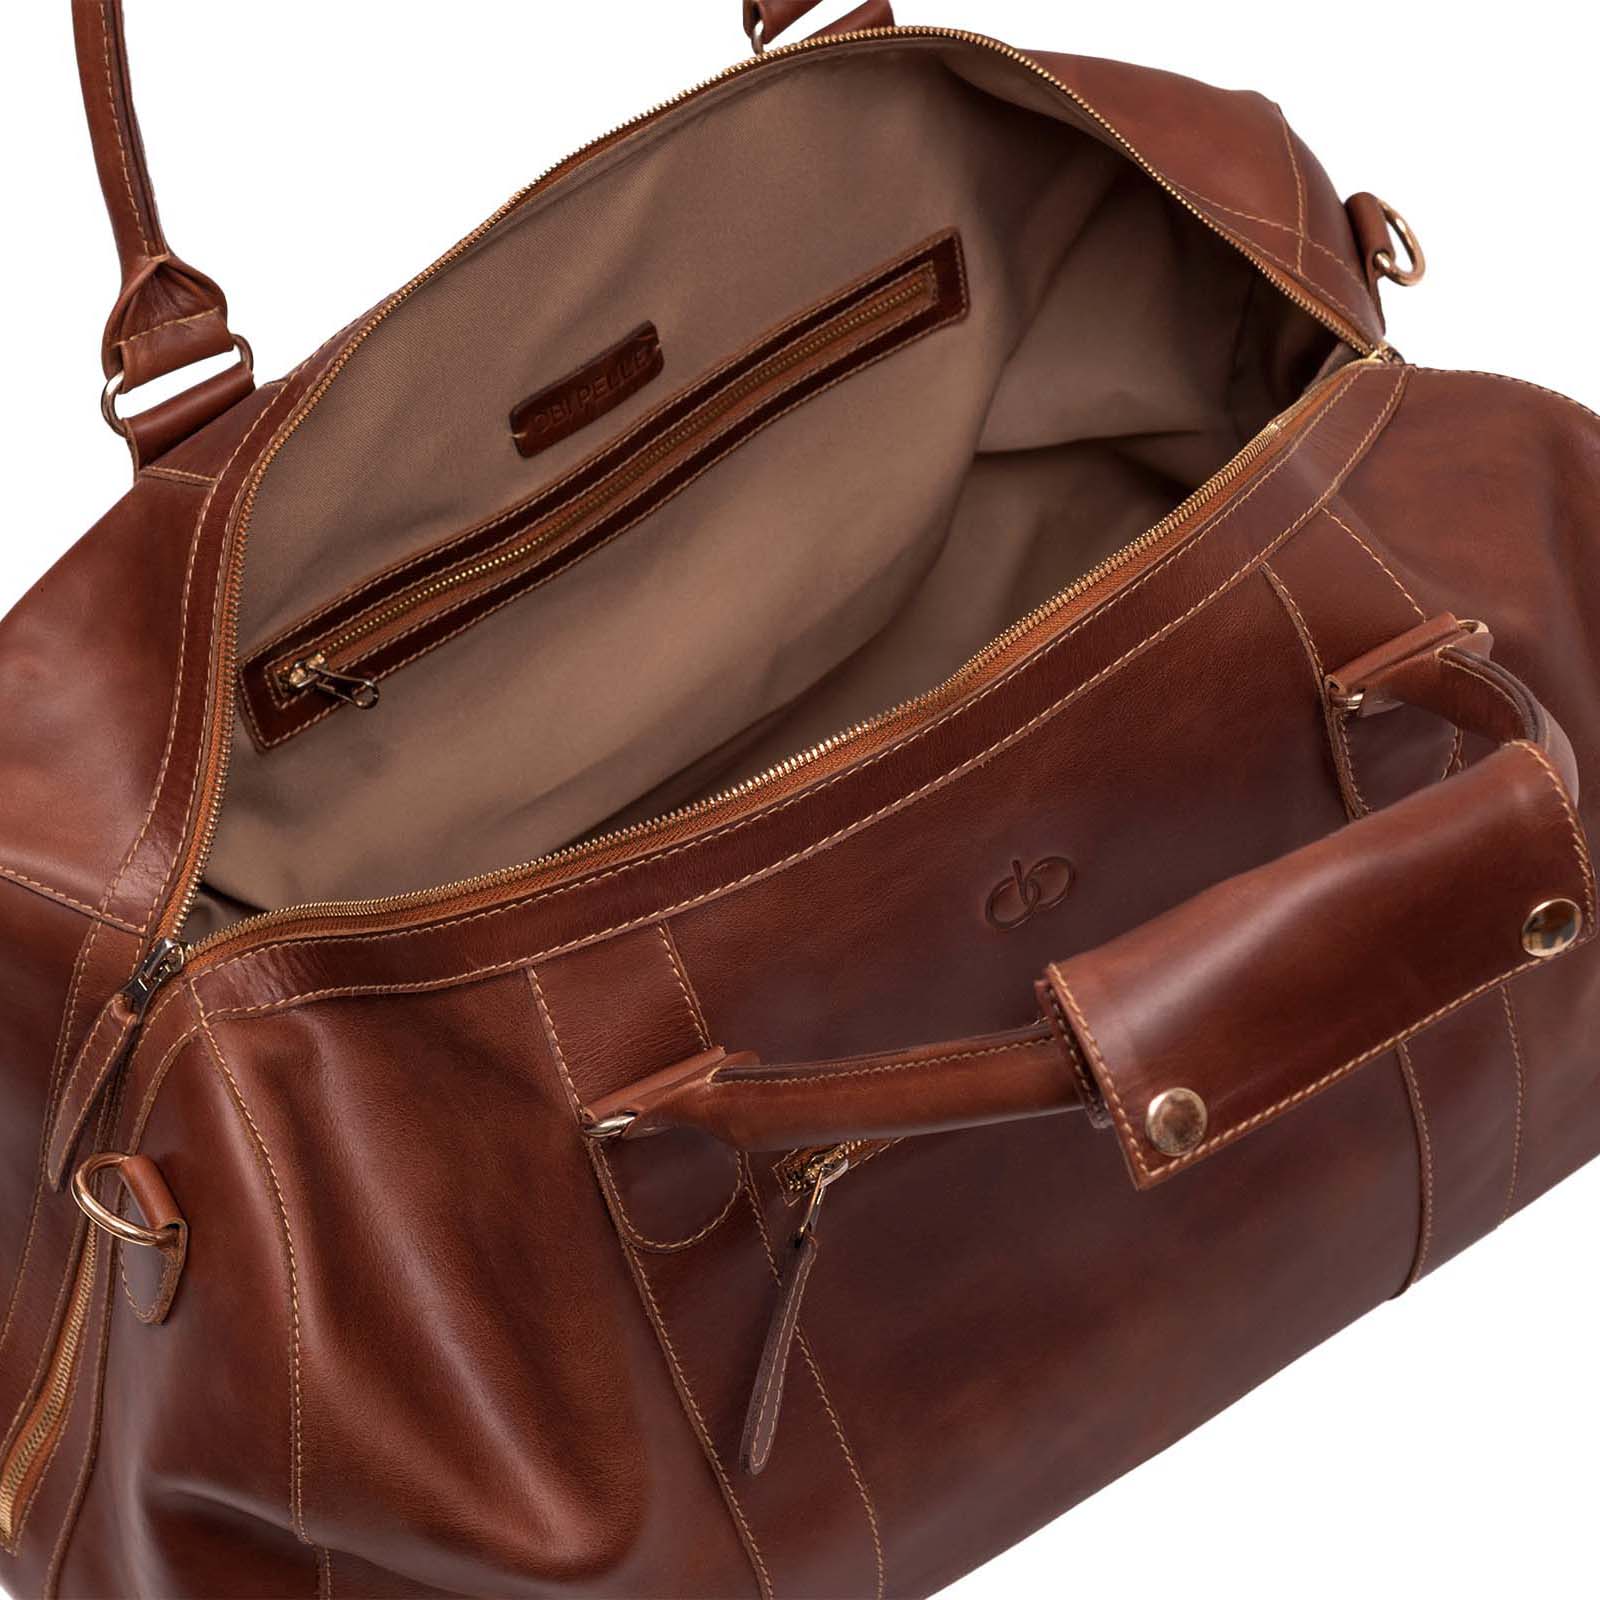 Harber Travel Bag Geneva Brown